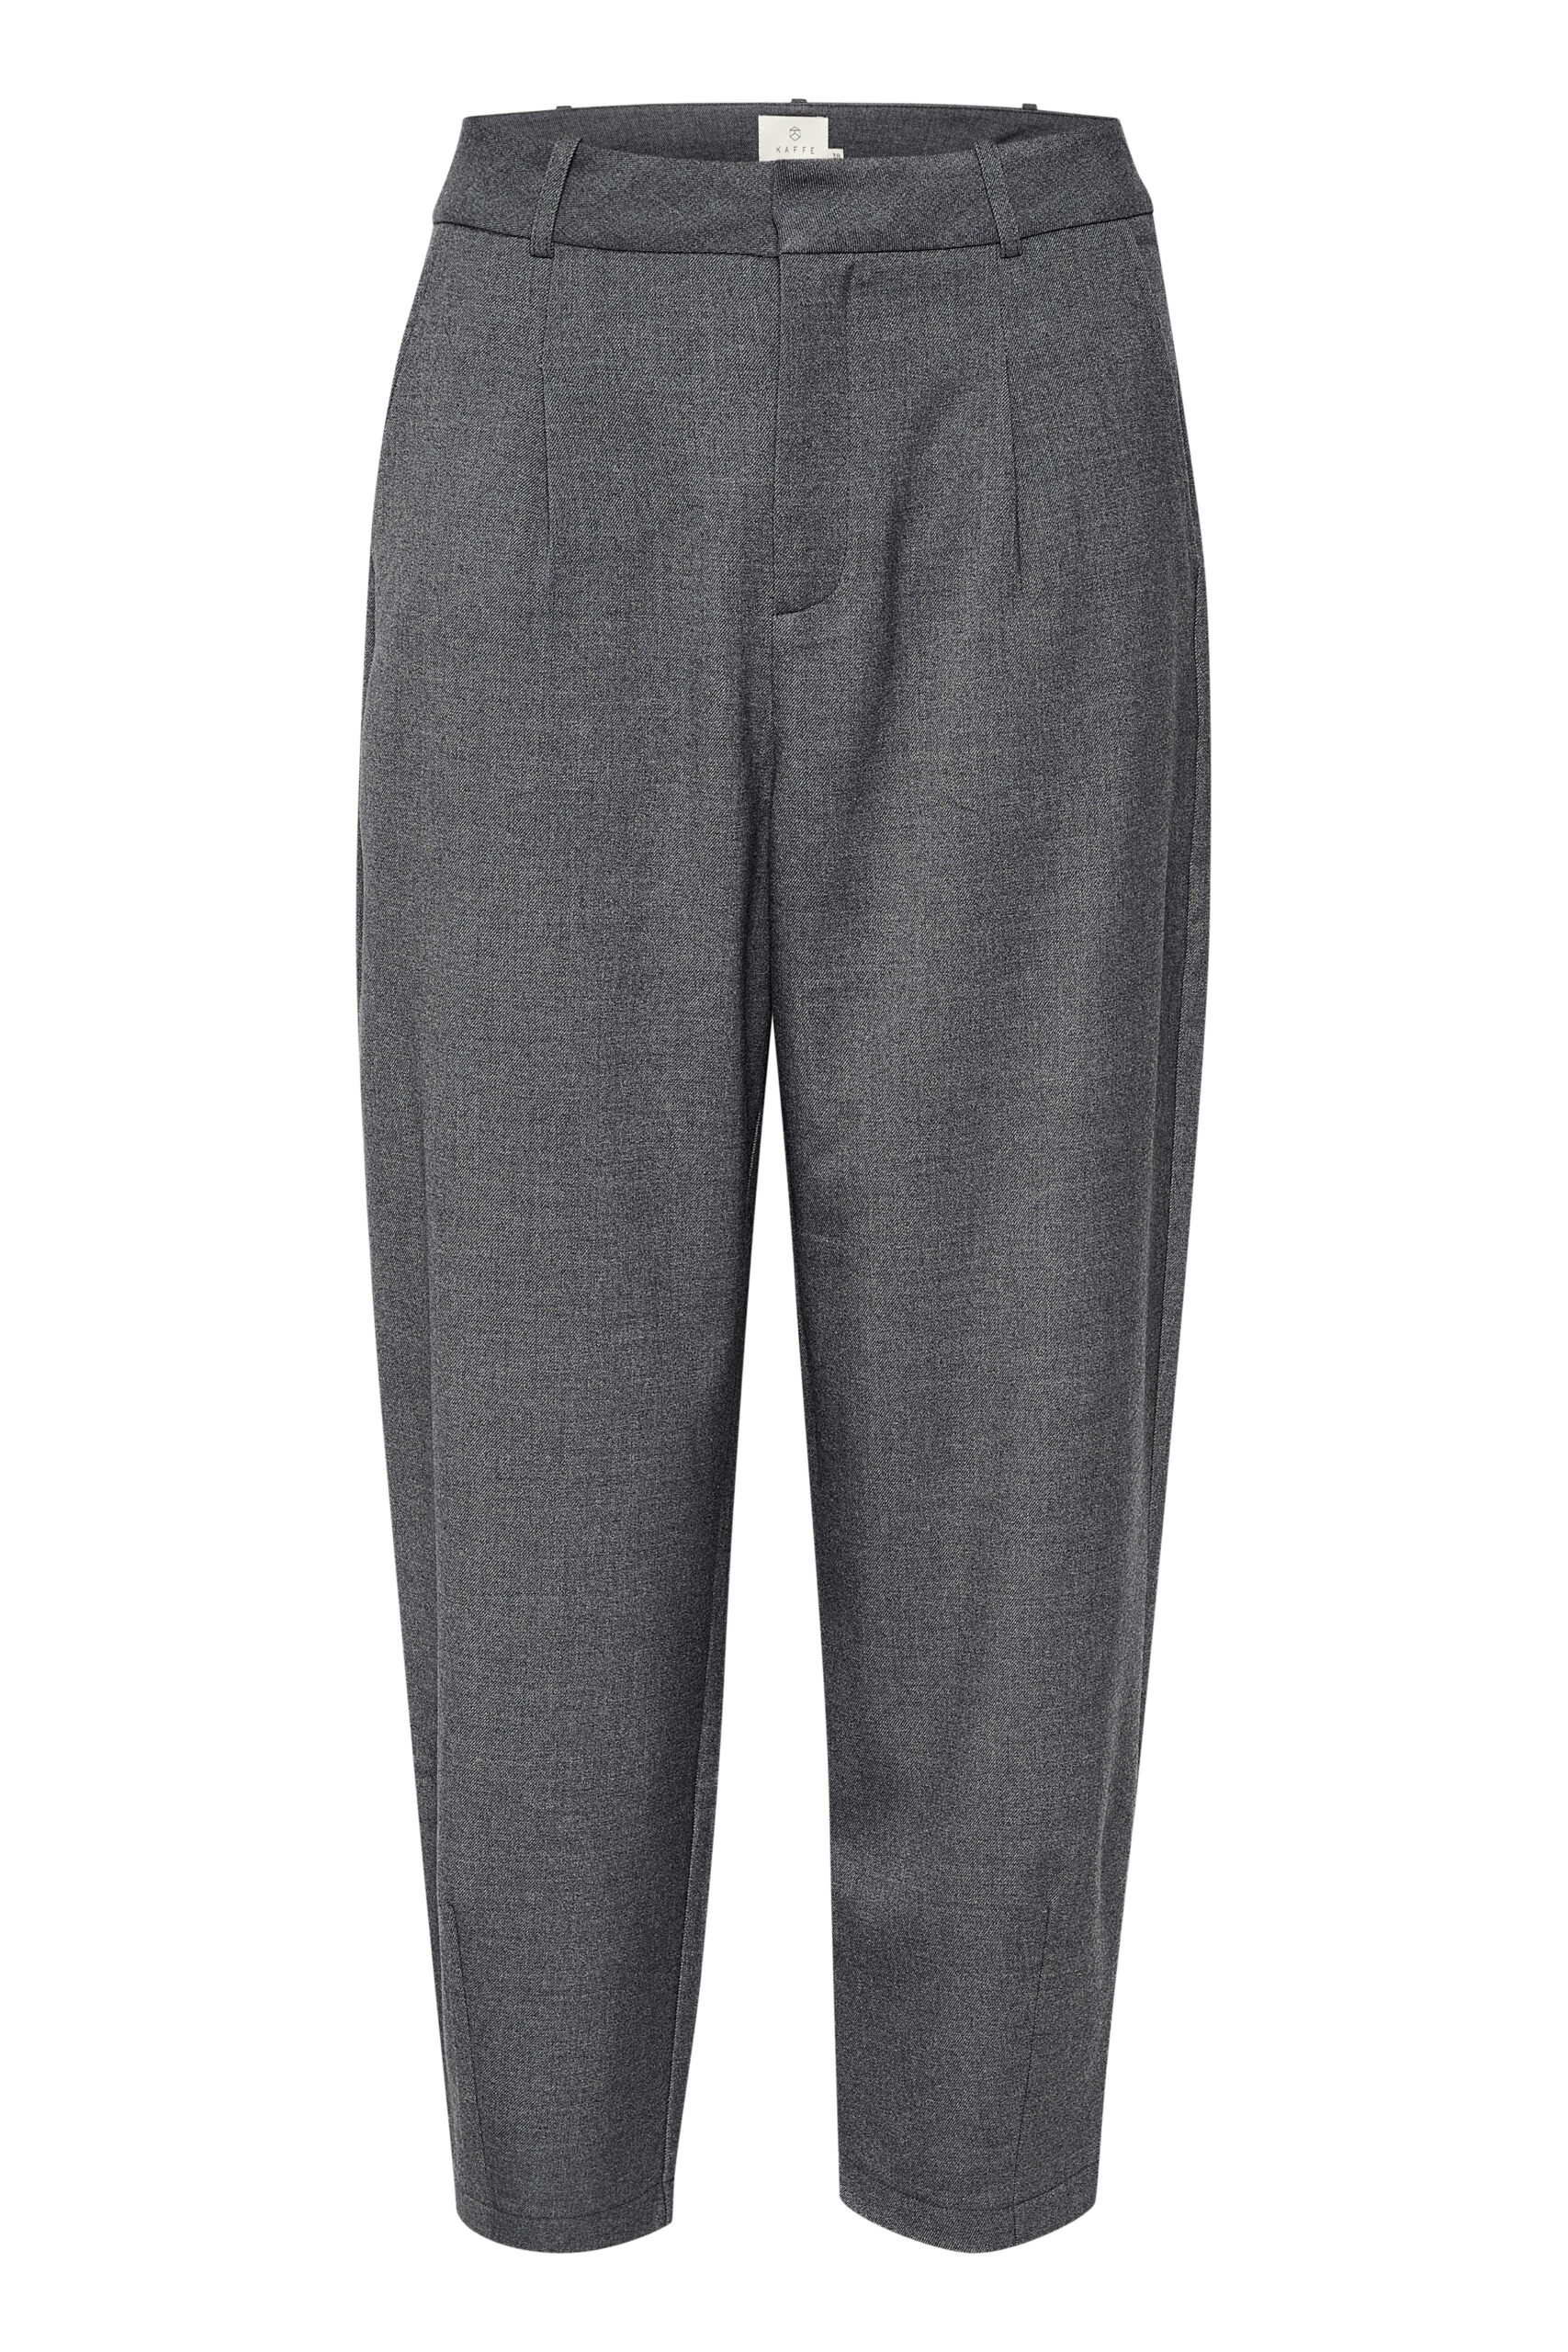 KAmerle Dark Grey Pants item front